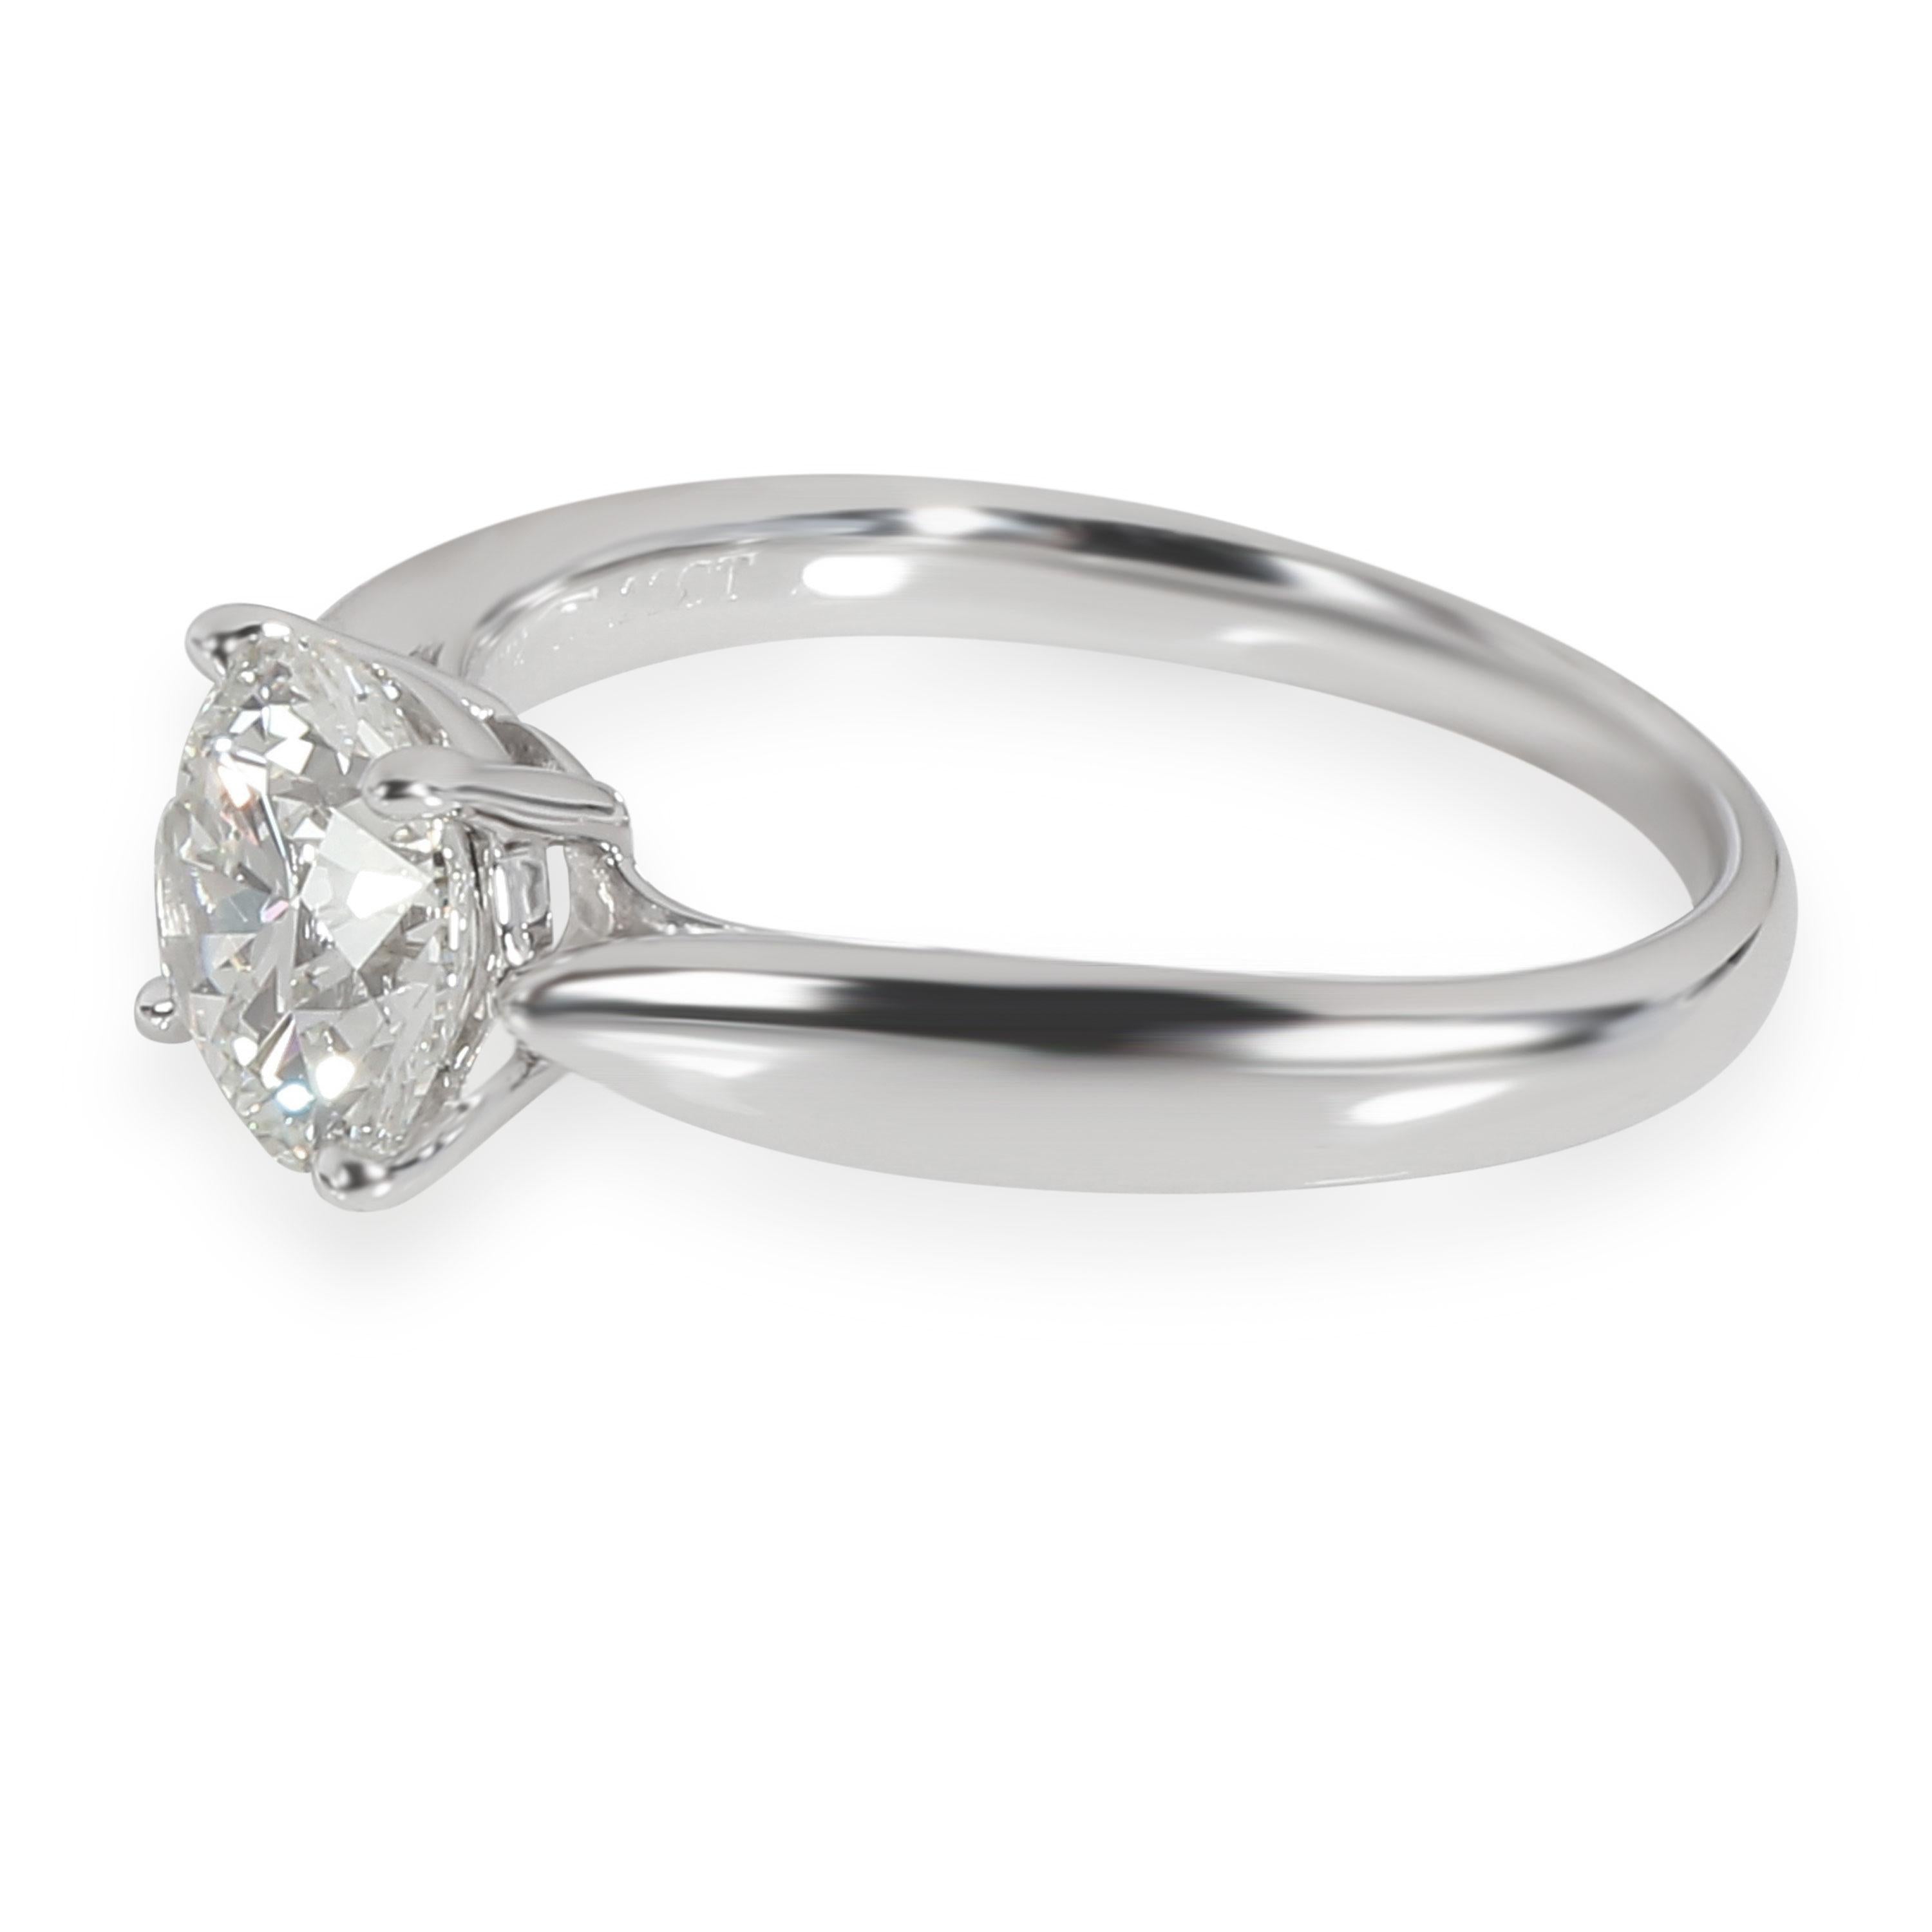 Women's Tiffany & Co. Harmony Diamond Engagement Ring in Platinum I VS2 1.22 Carat